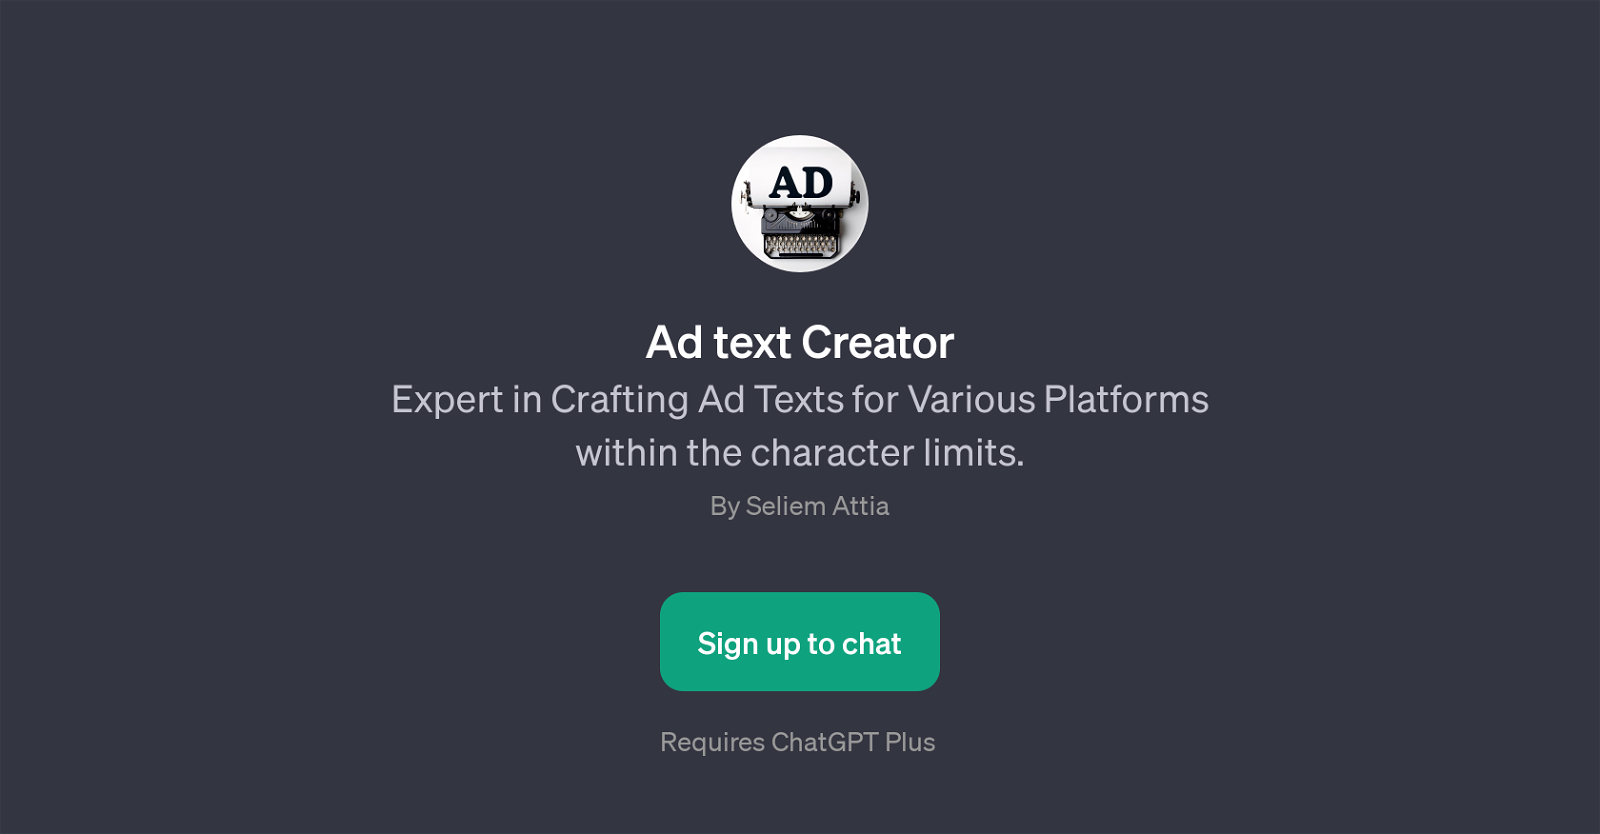 Ad text Creator website